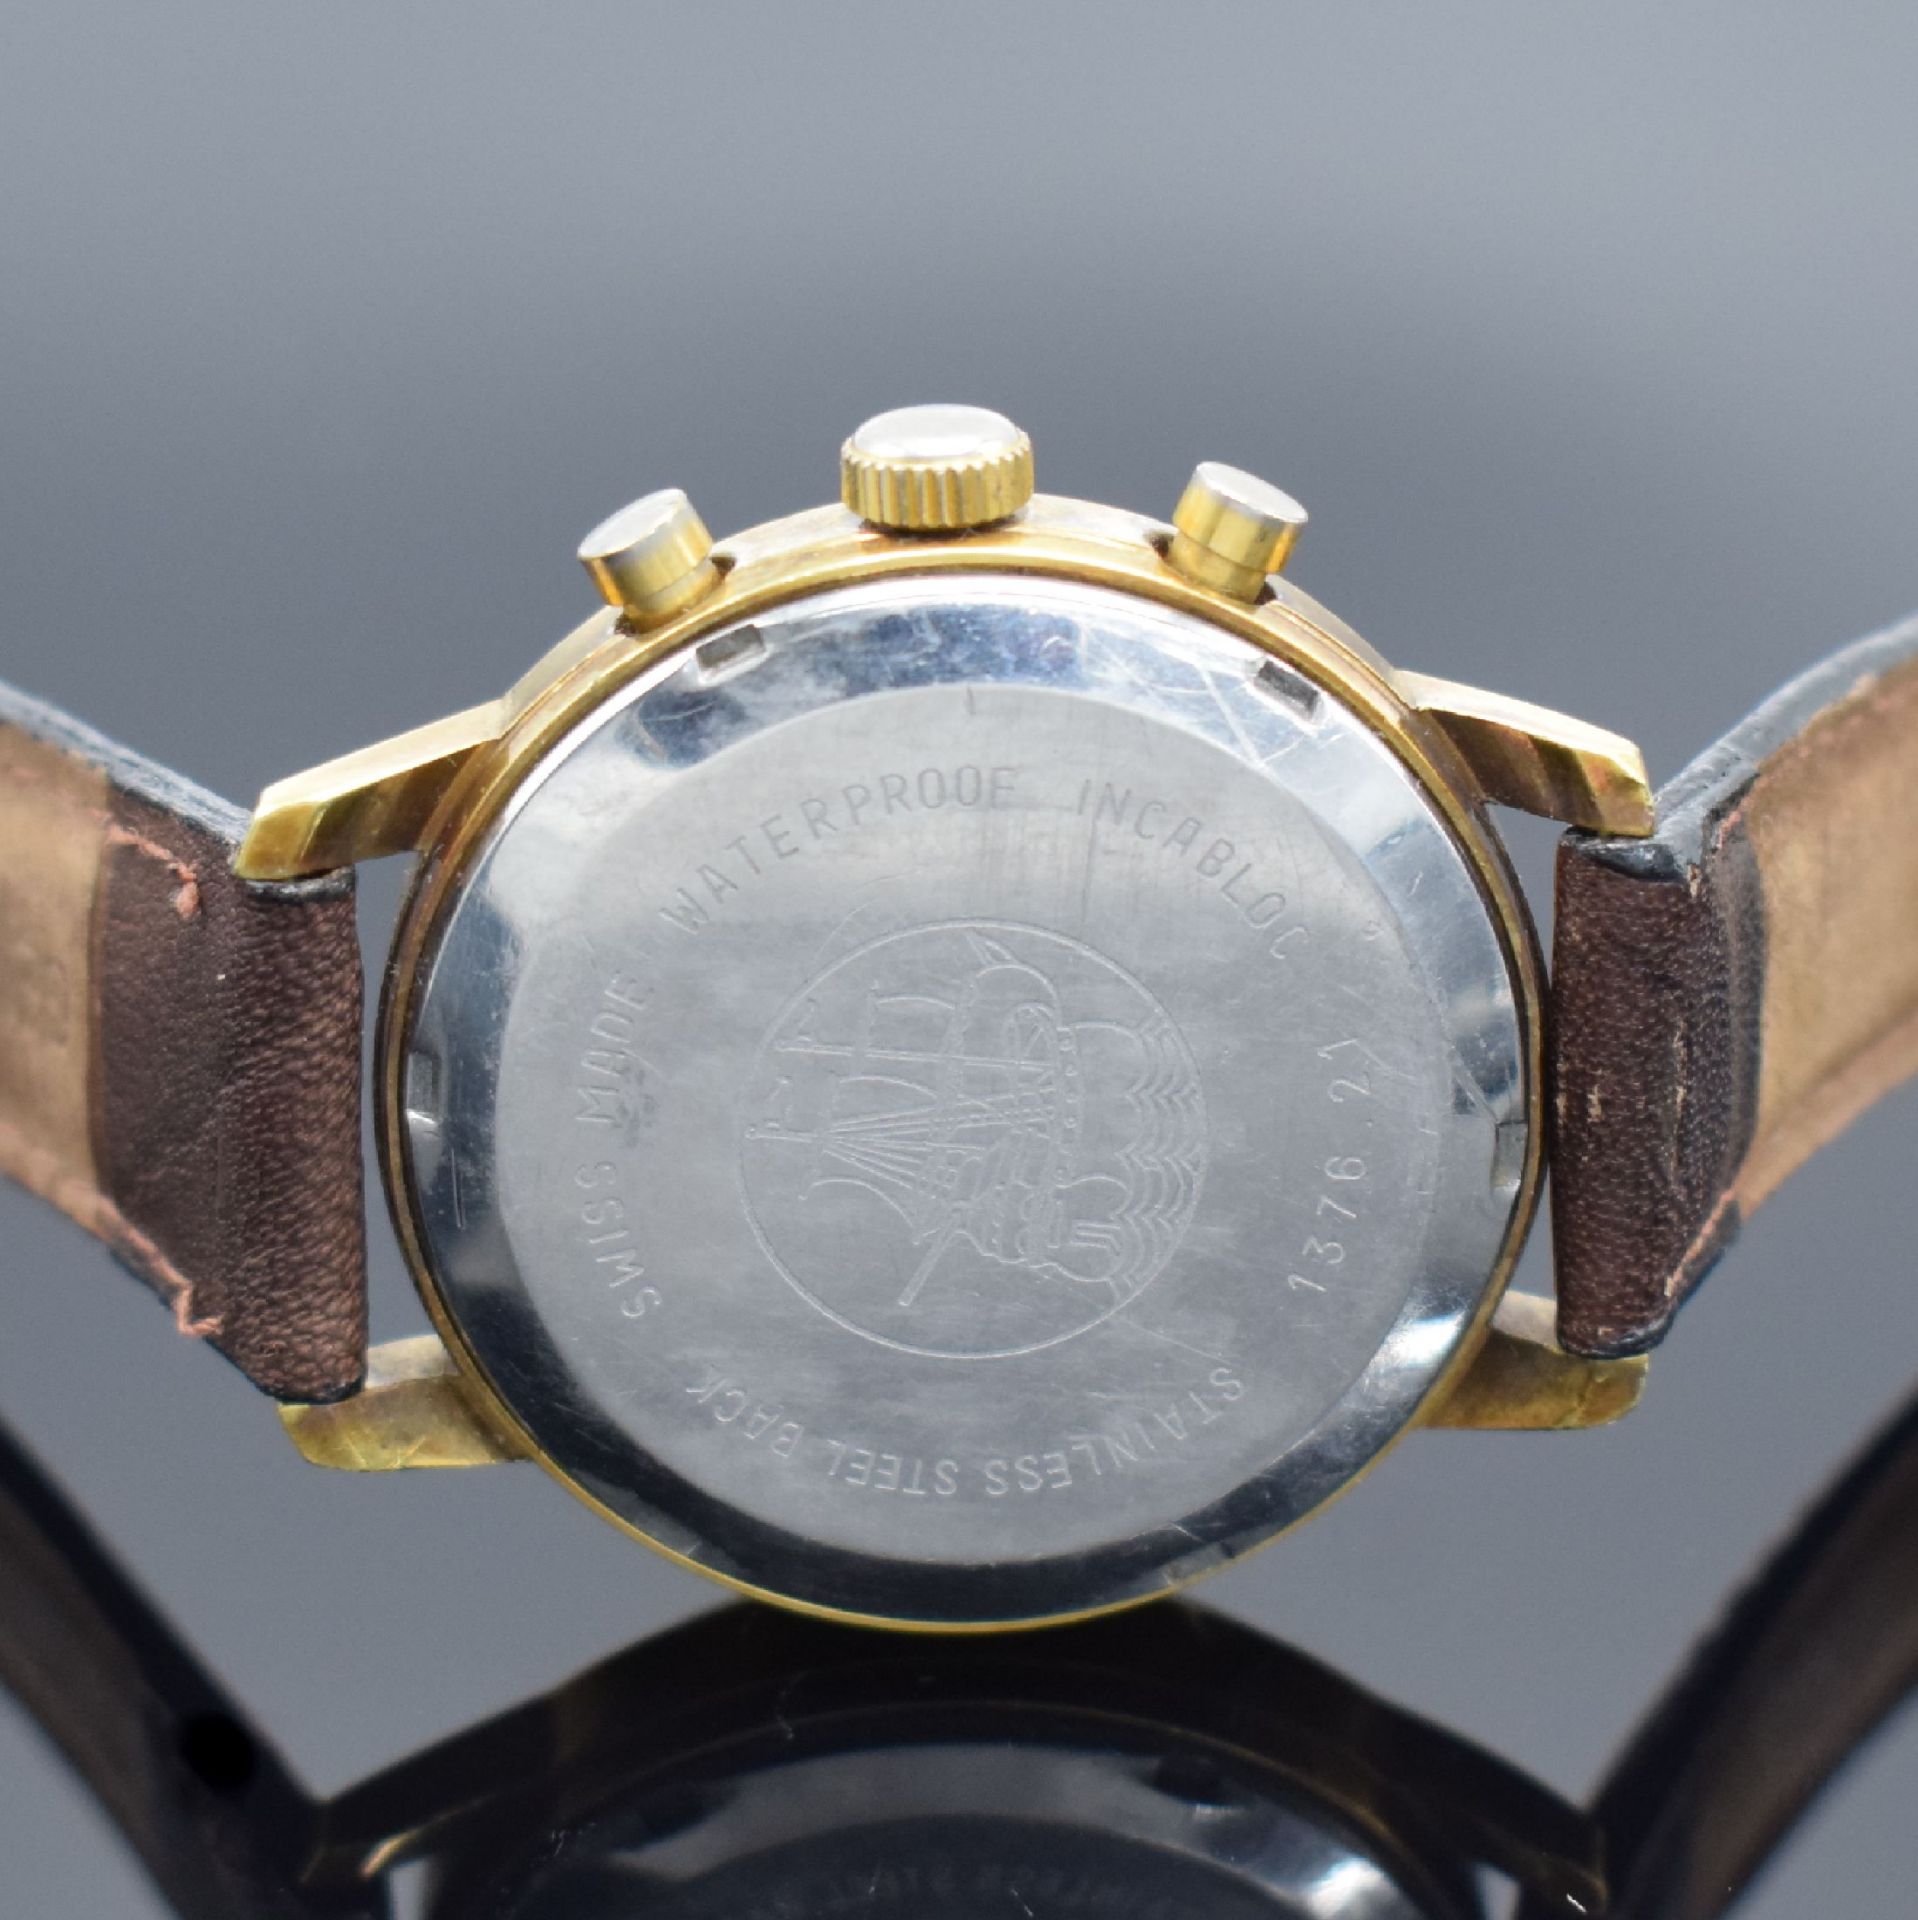 ROAL Geneve Herrenchronograph mit Kaliber Valjoux 7733, - Bild 5 aus 7